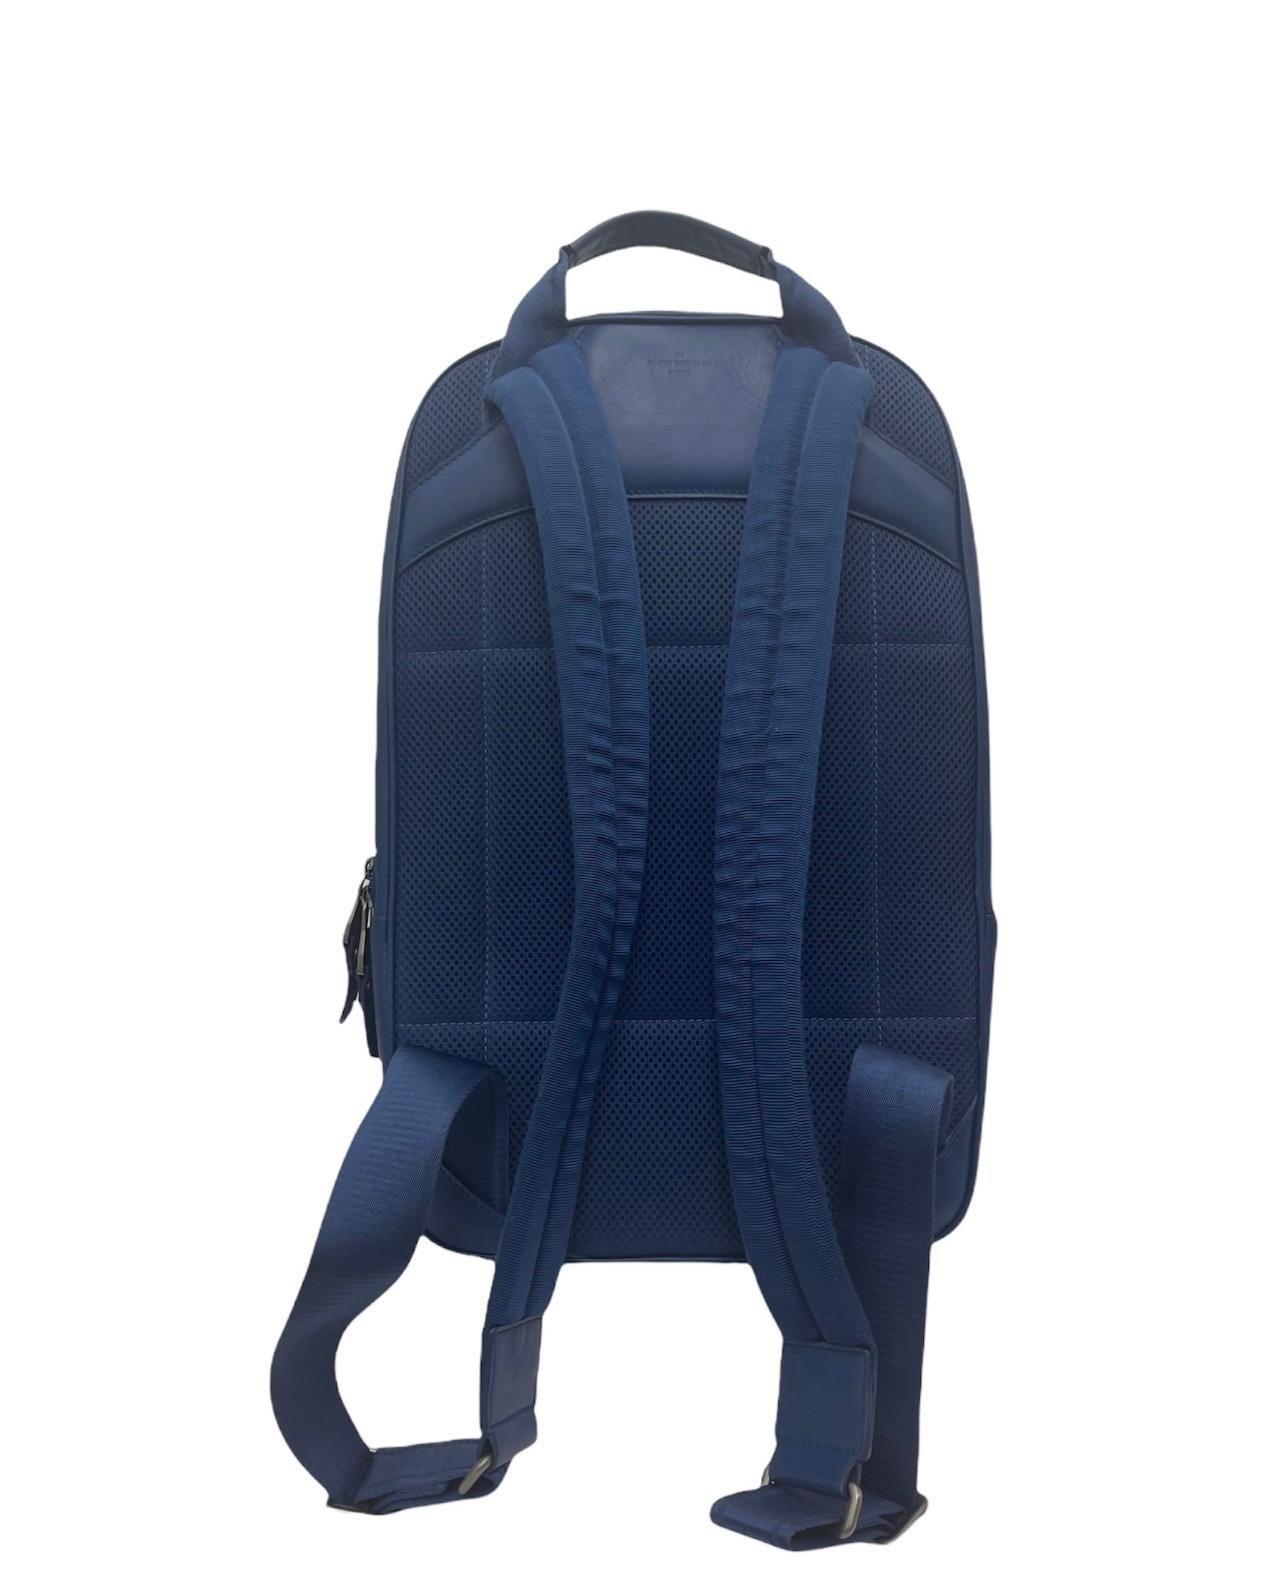 blue leather backpacks